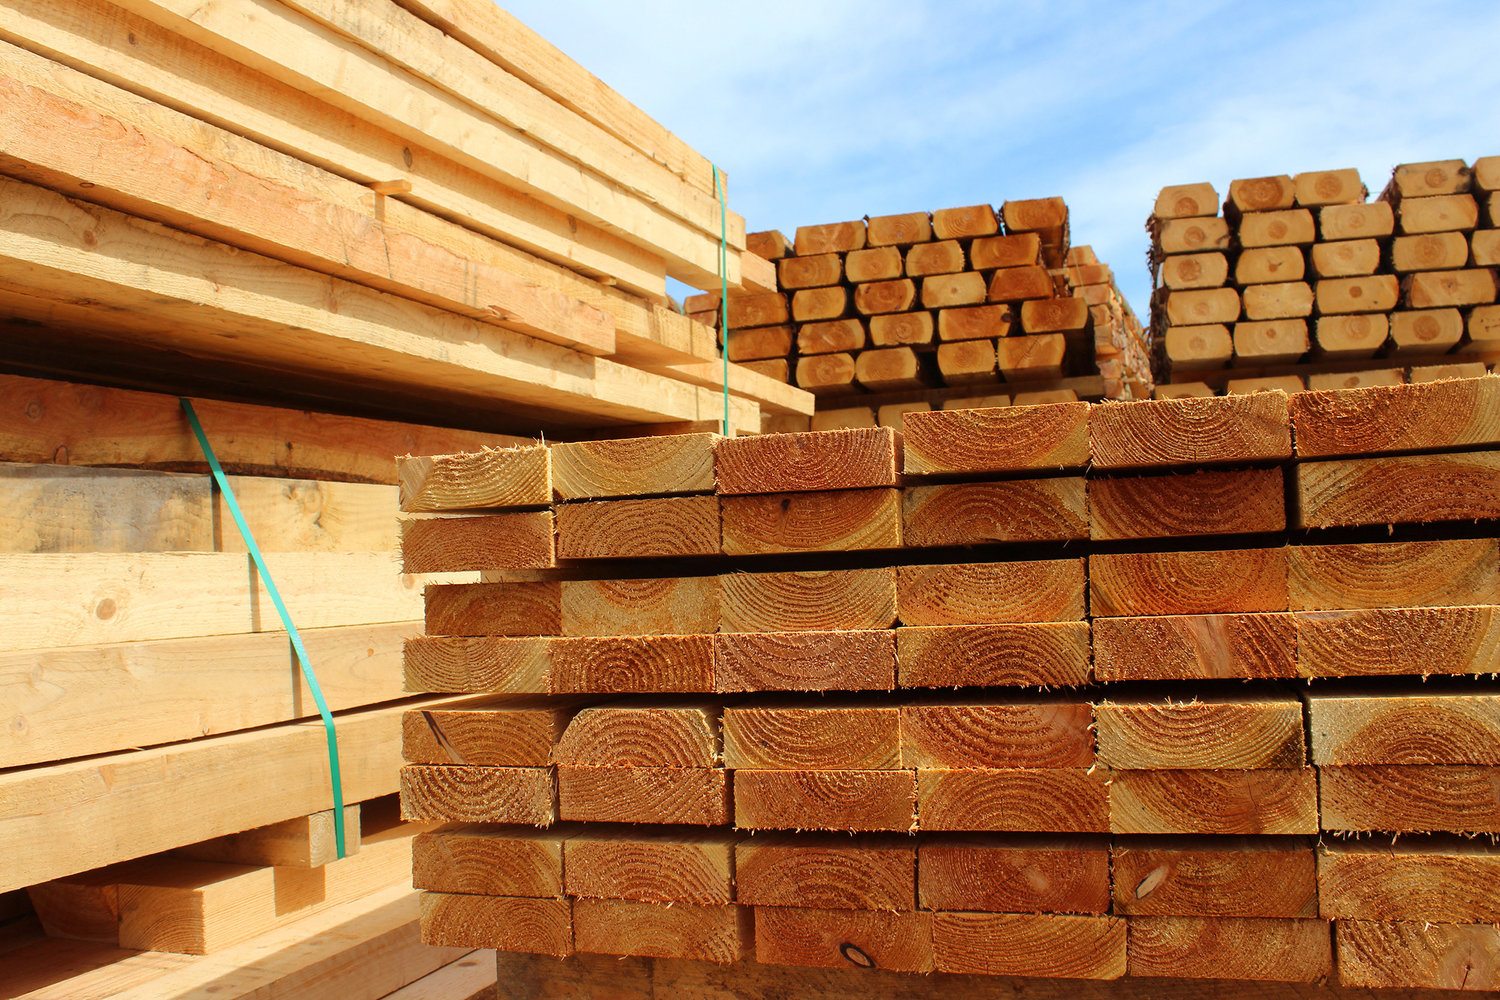 Dimensional Lumber & Building Supplies Chilliwack